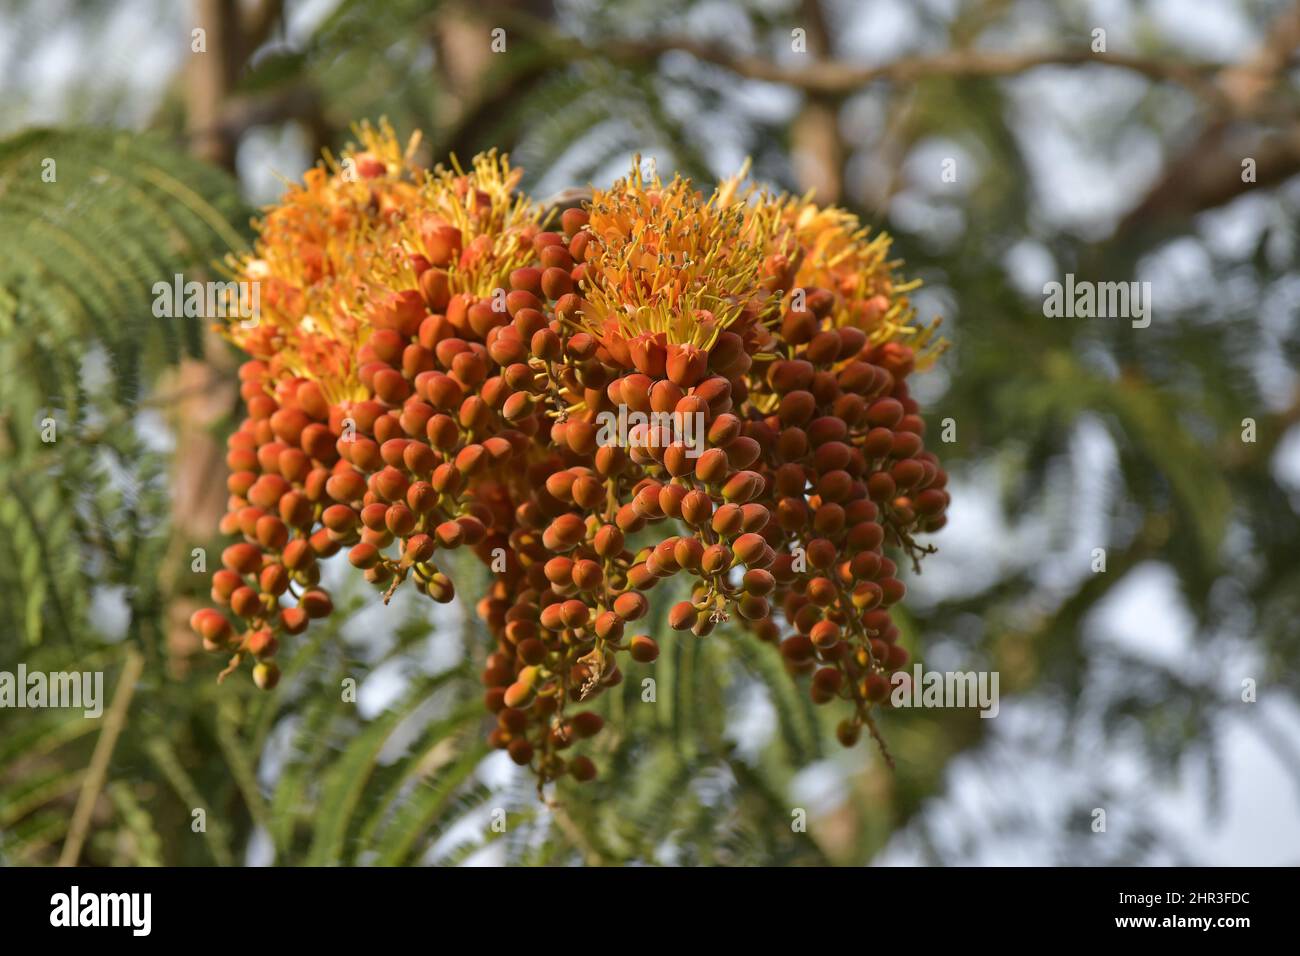 Colvillea racemosa, legume plant native to Madagascar with orange flowers growing in clusters, Palmetum in Santa Cruz de Tenerife Canary Islands. Stock Photo